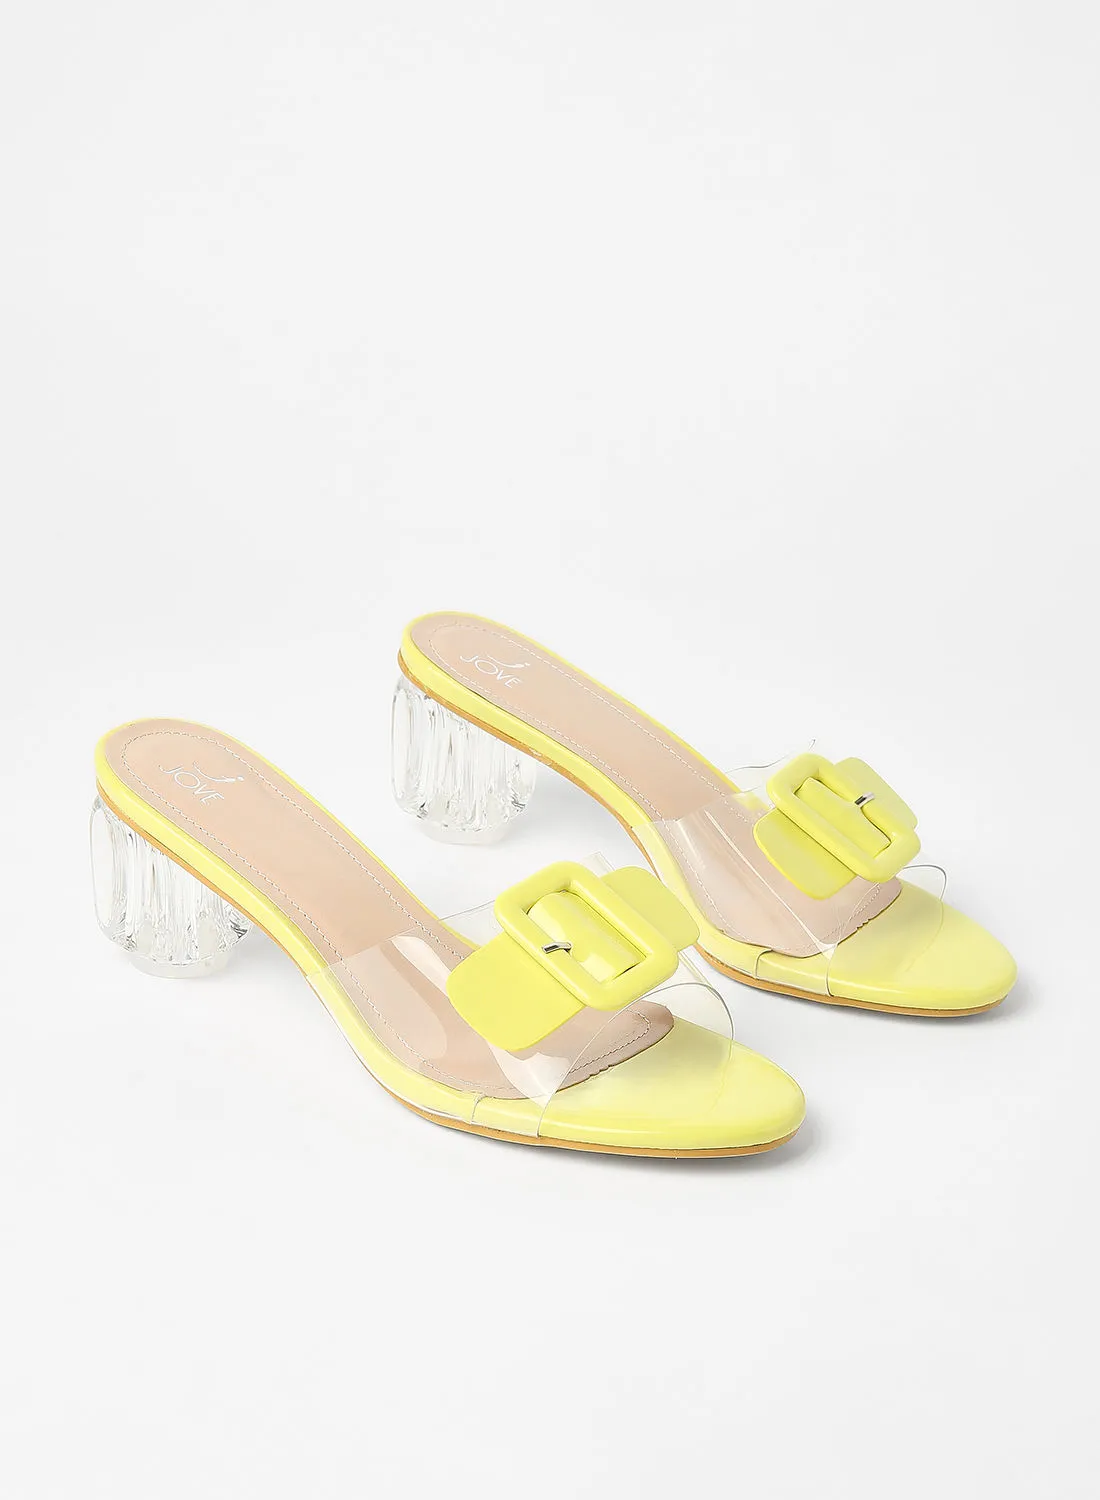 Jove Stylish Elegant Heeled Sandals Yellow/Clear